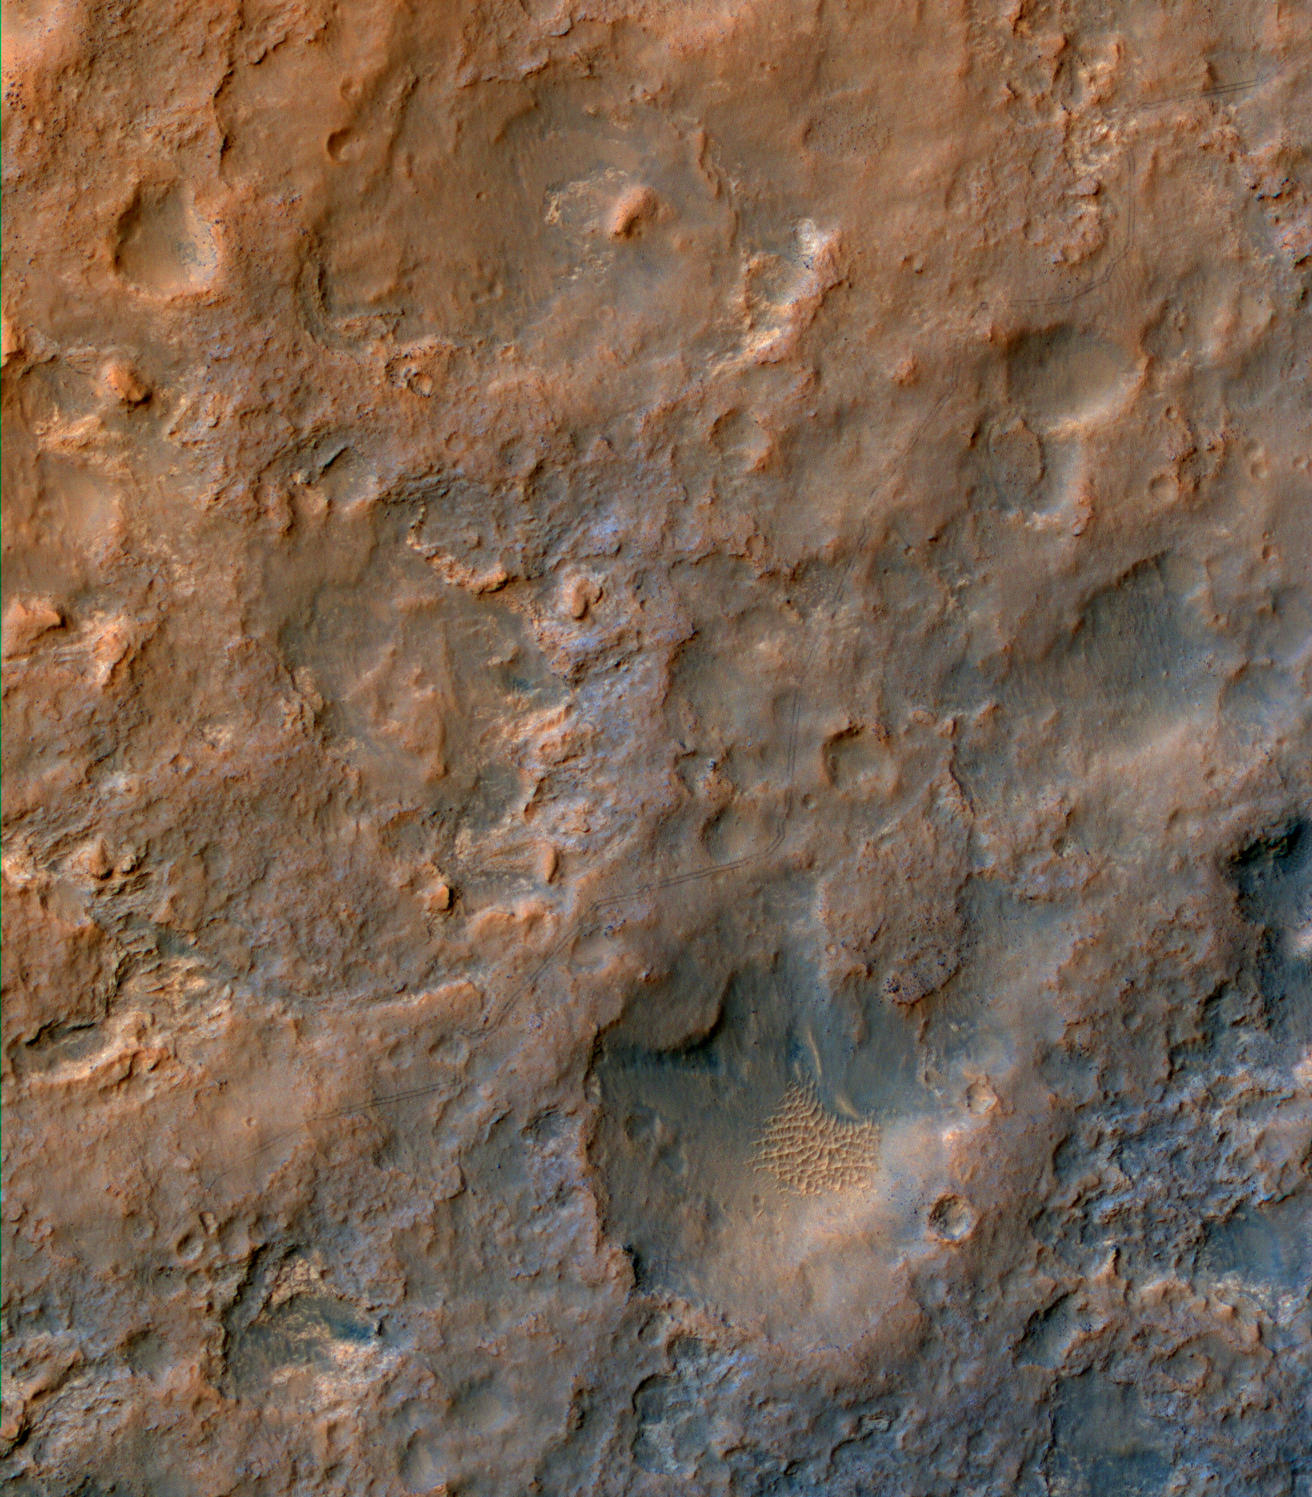 Curiosity Rover Tracks, Viewed from Orbit in December 2013